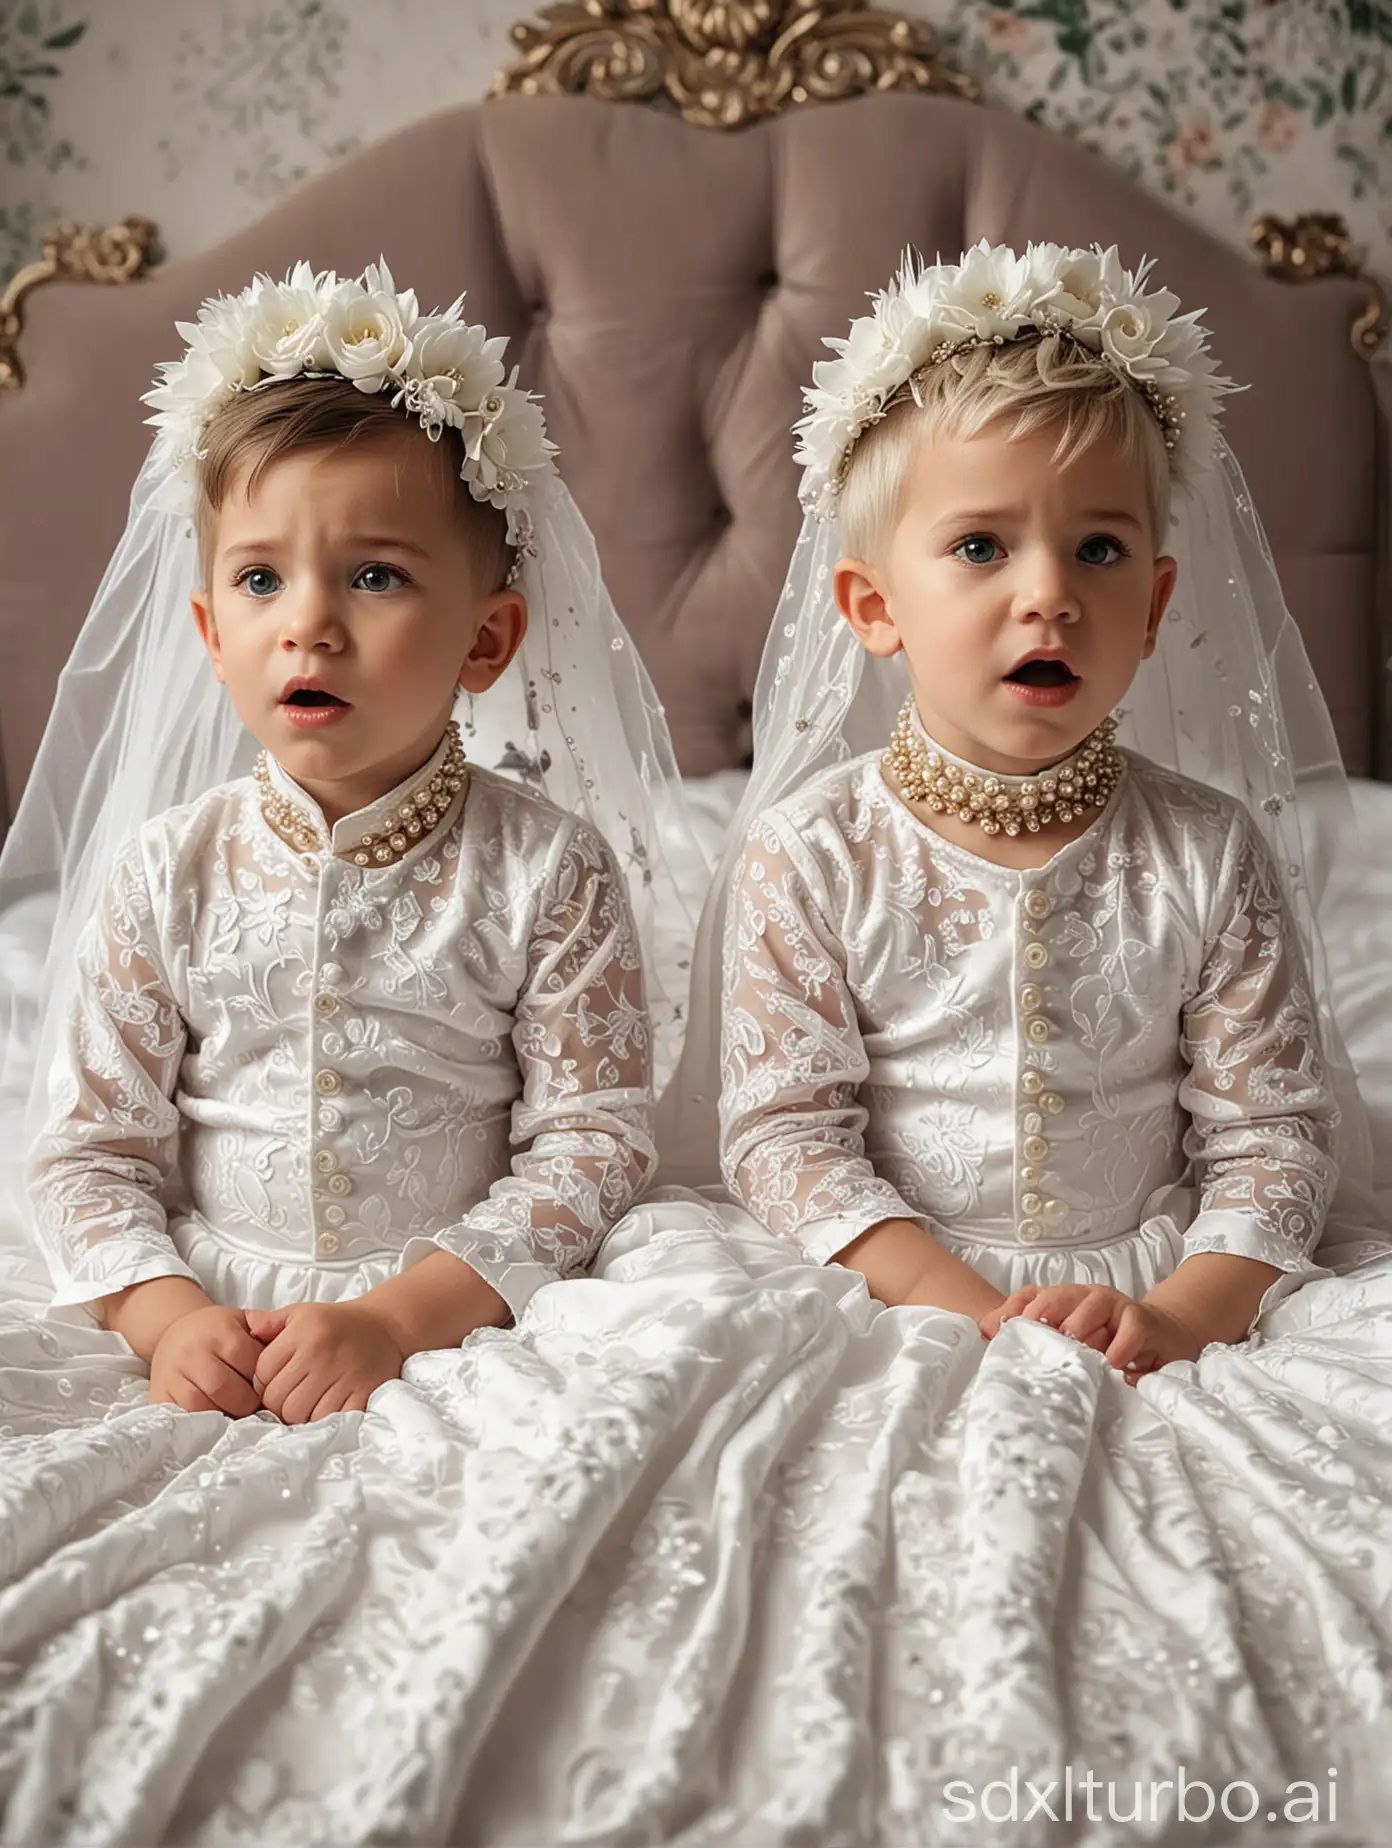 Adorable-Boys-Awaken-in-Extravagant-Wedding-Dresses